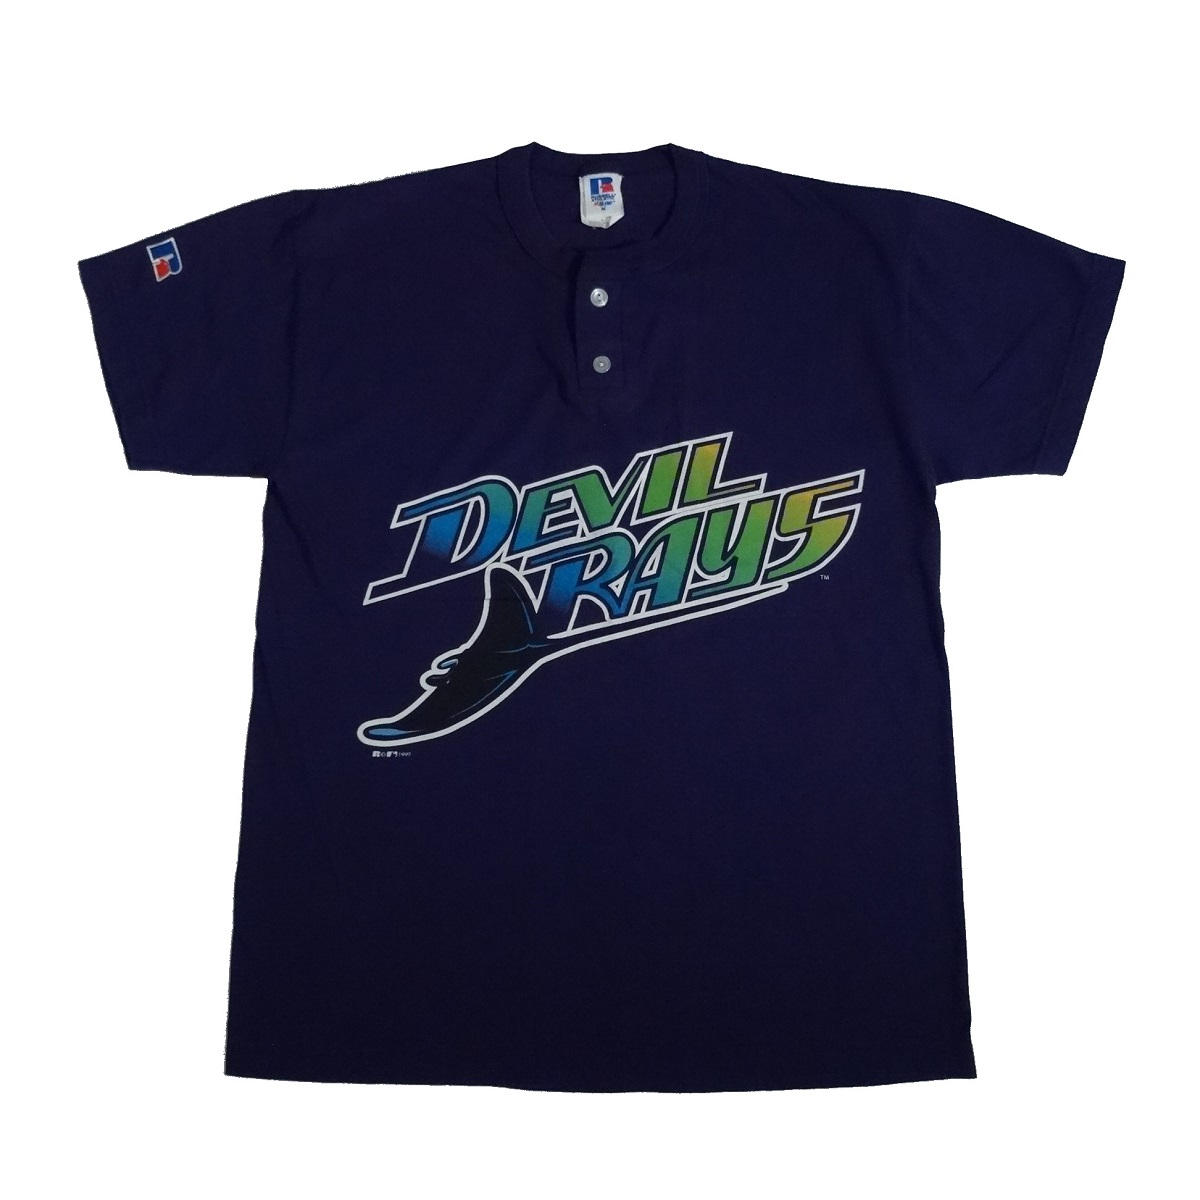 Tampa Bay Devil Rays Shirt Vintage 90s - Tarks Tees